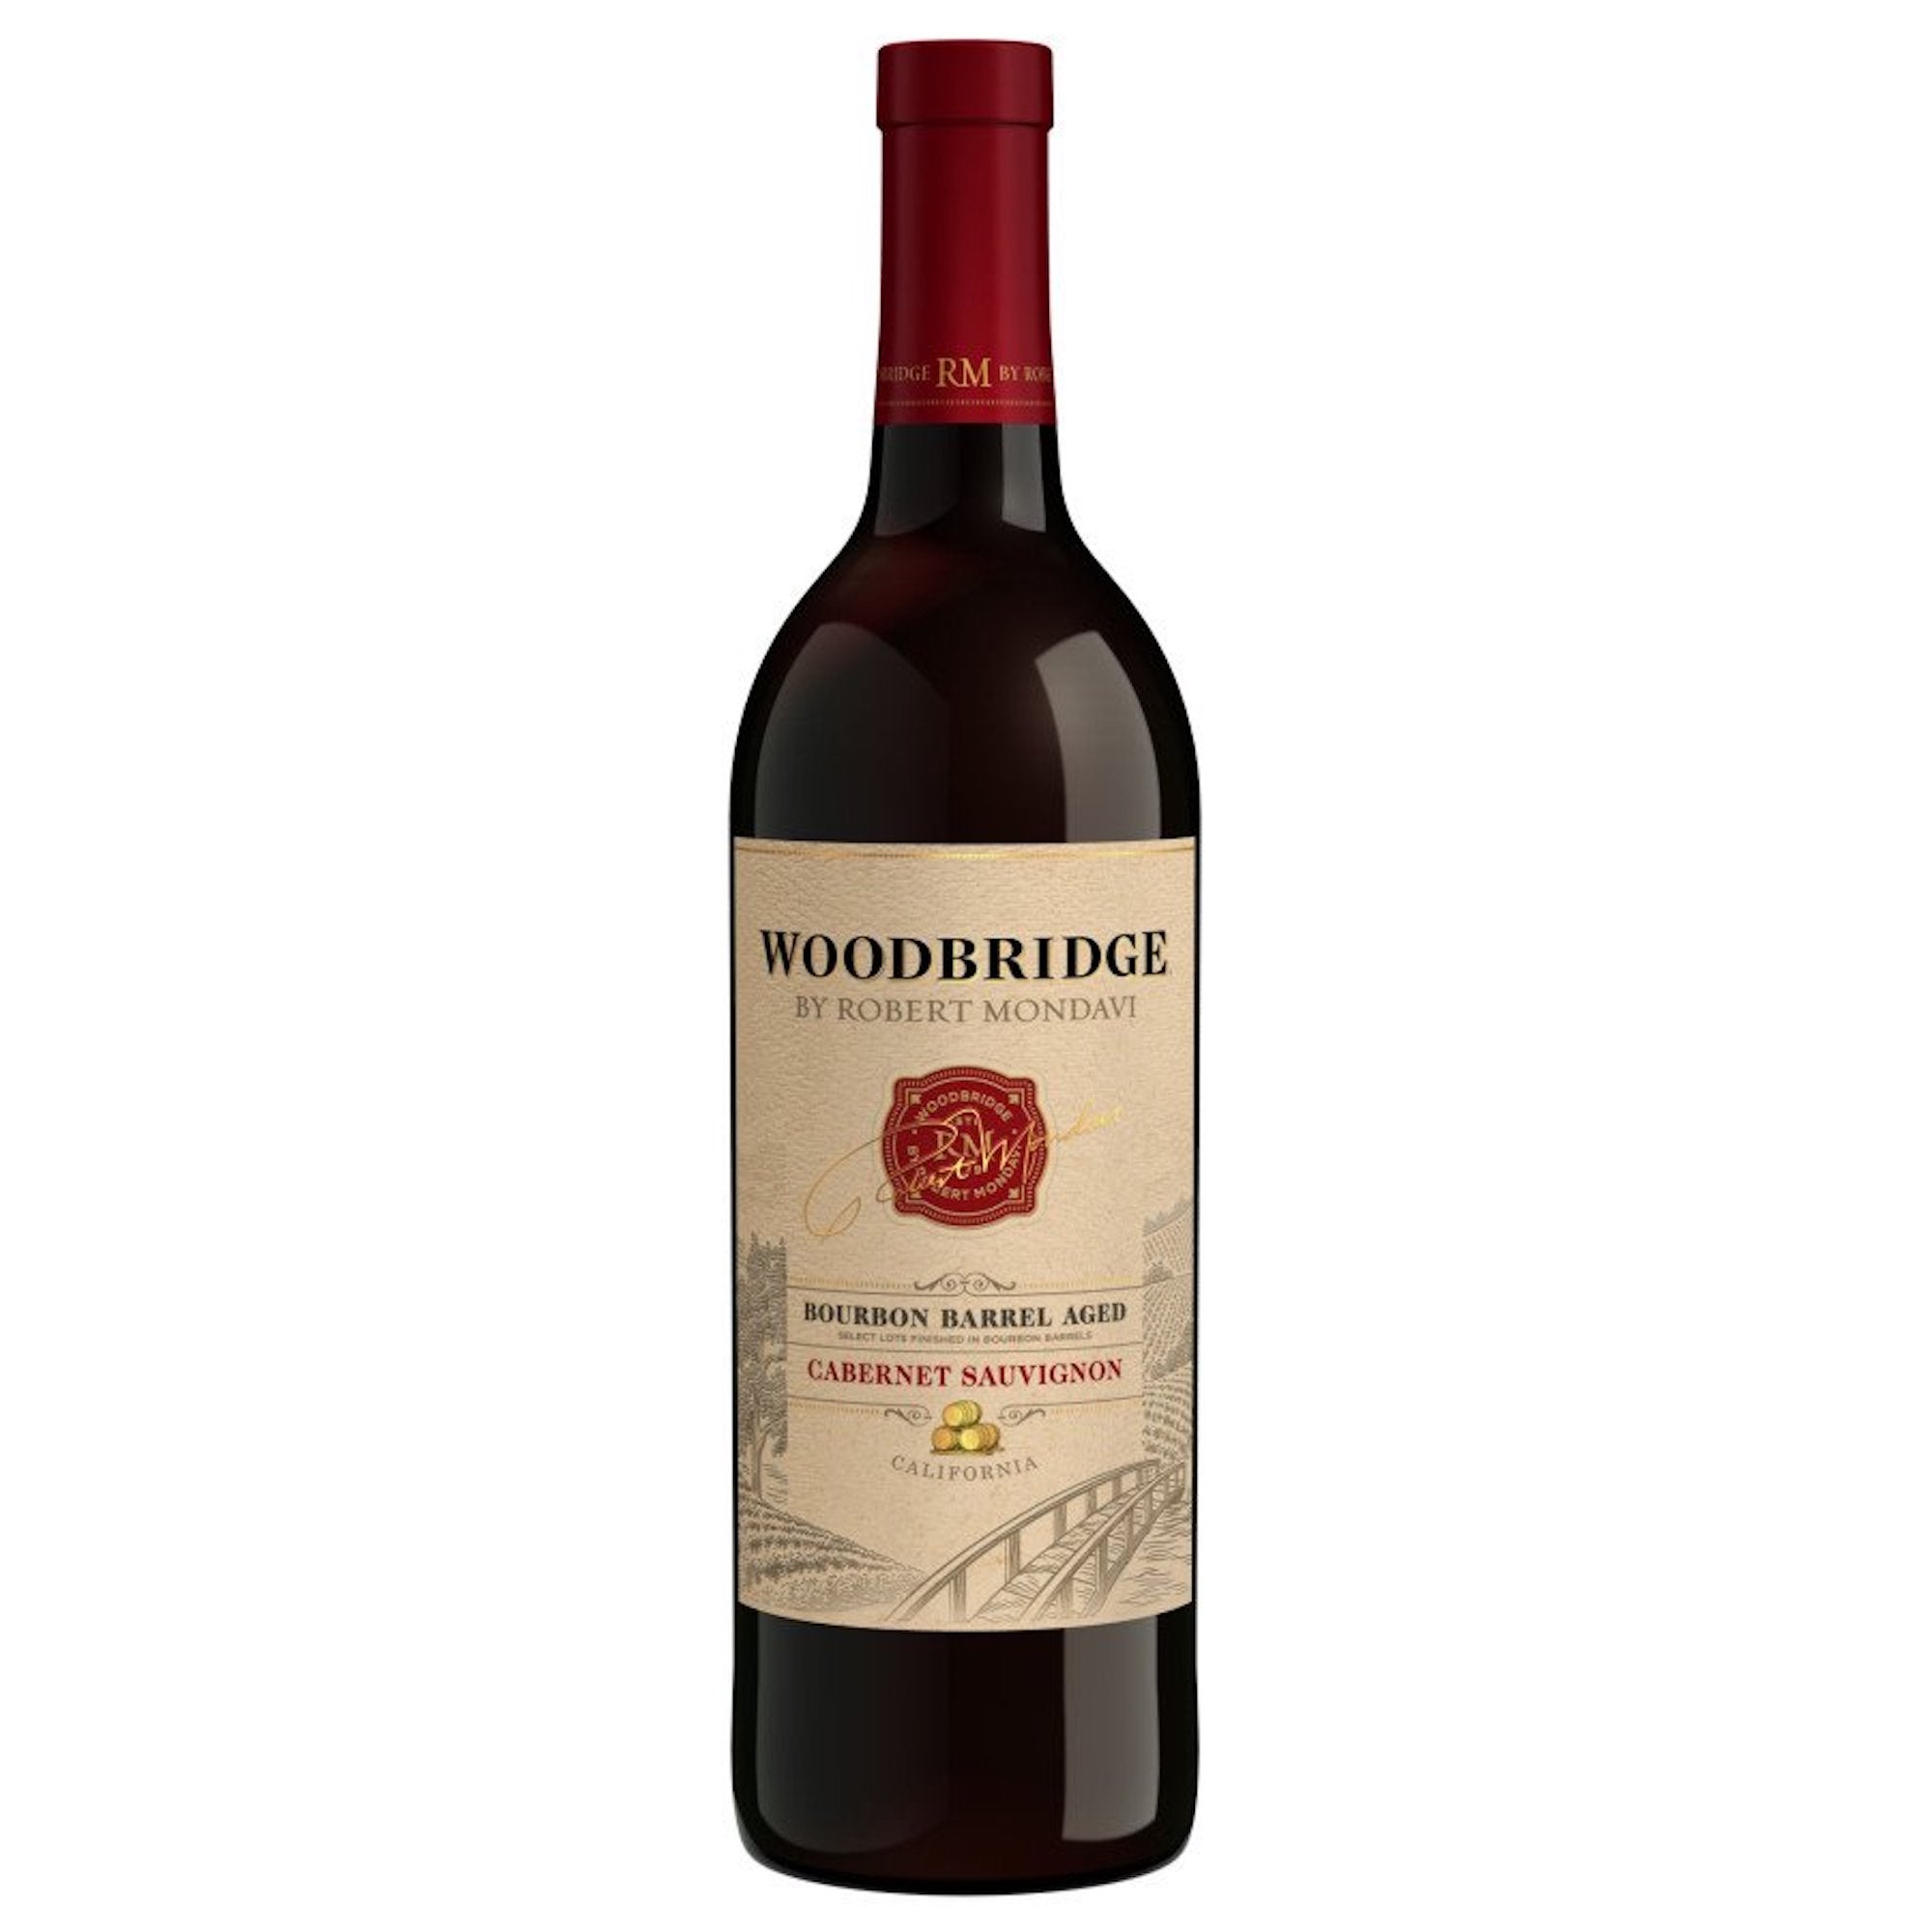 Robert Mondavi Woodbridge Bourbon Barrel Aged Cabernet Sauvignon